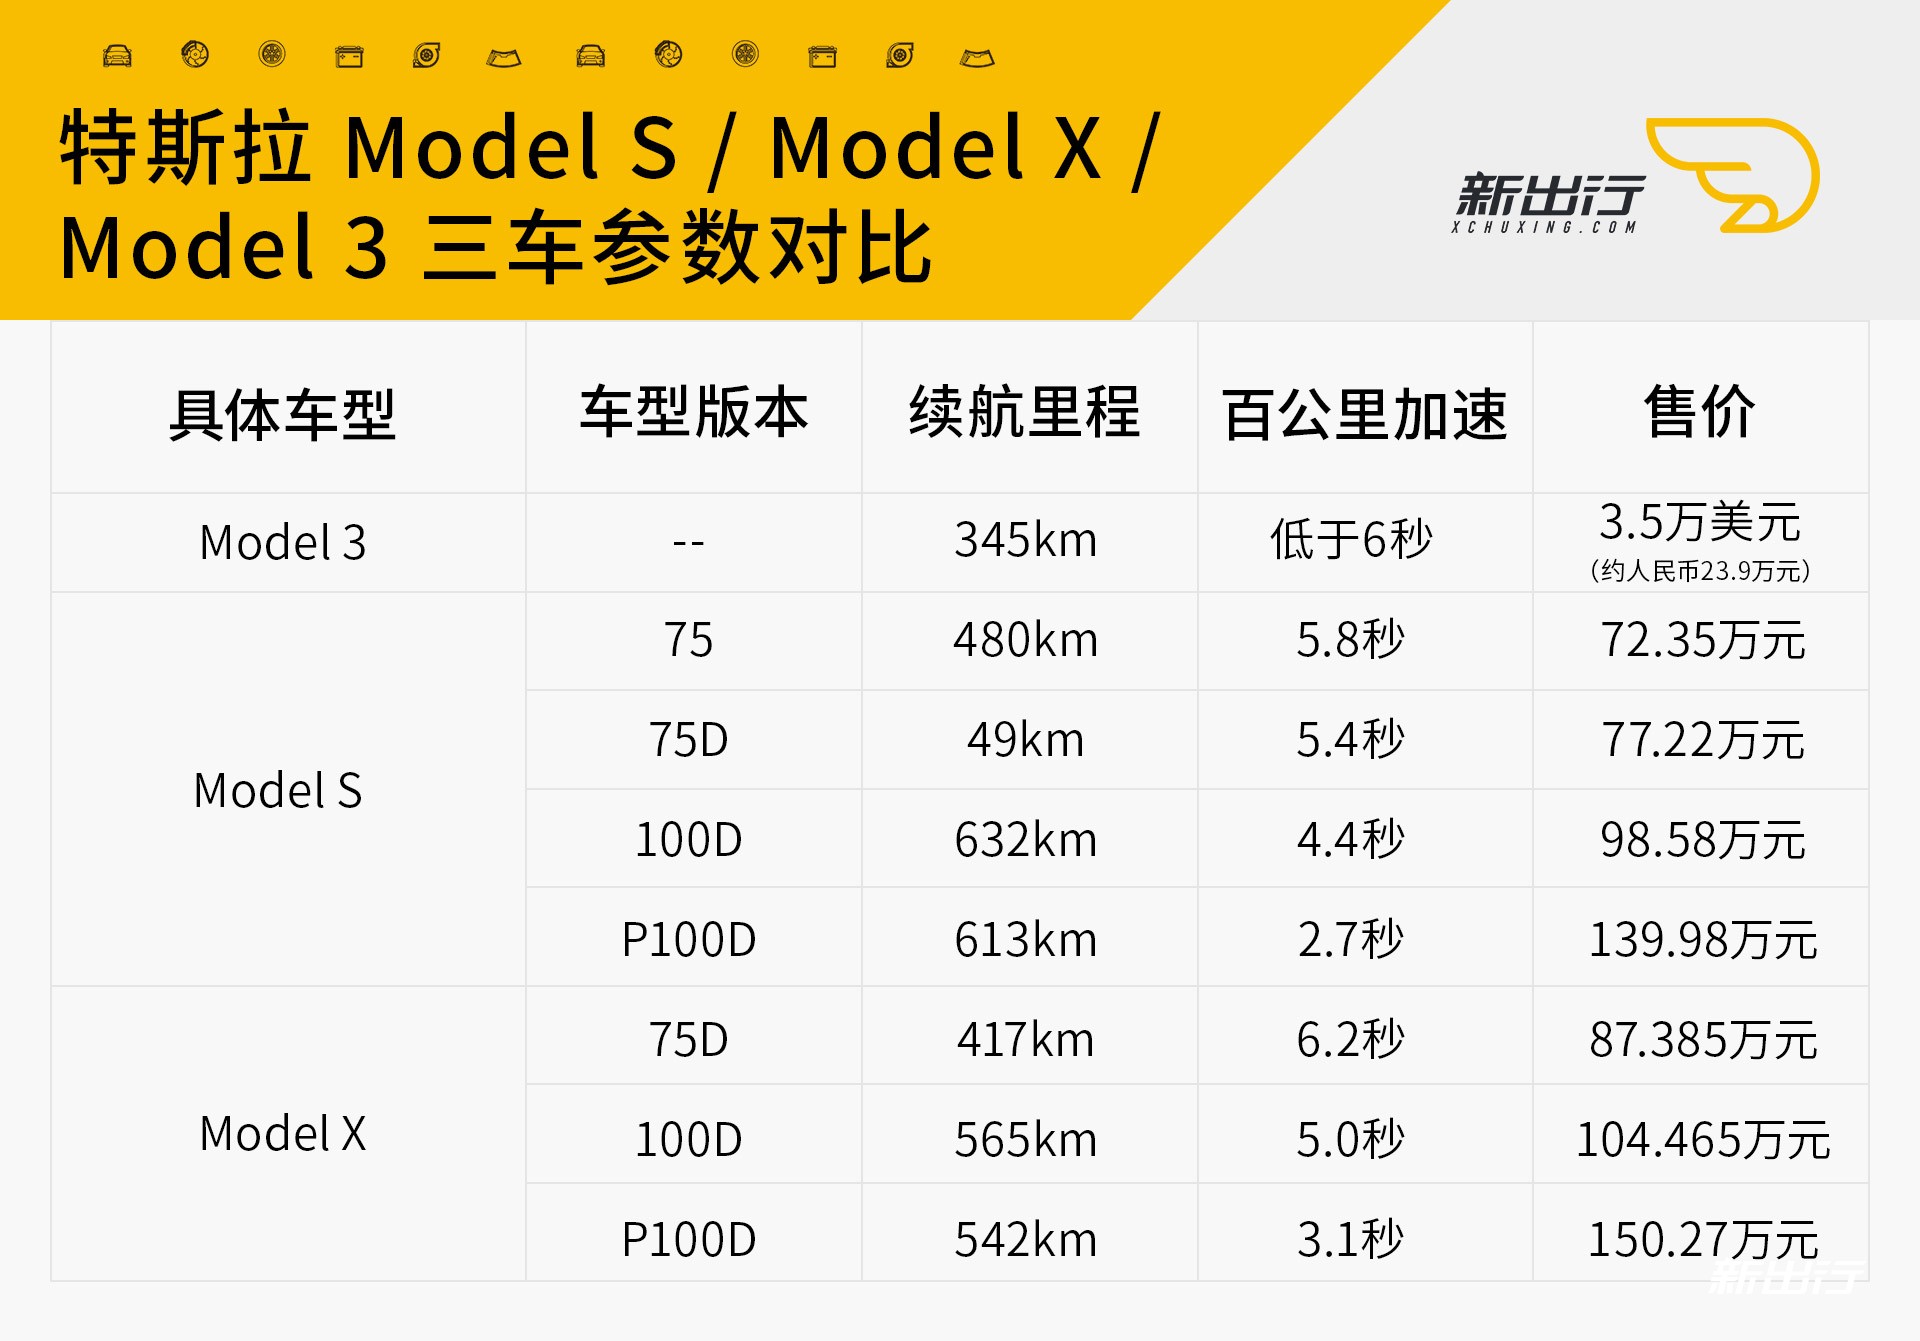 model s,model x 和 model 3 三车参数对比2,特斯拉 model 3 续航为